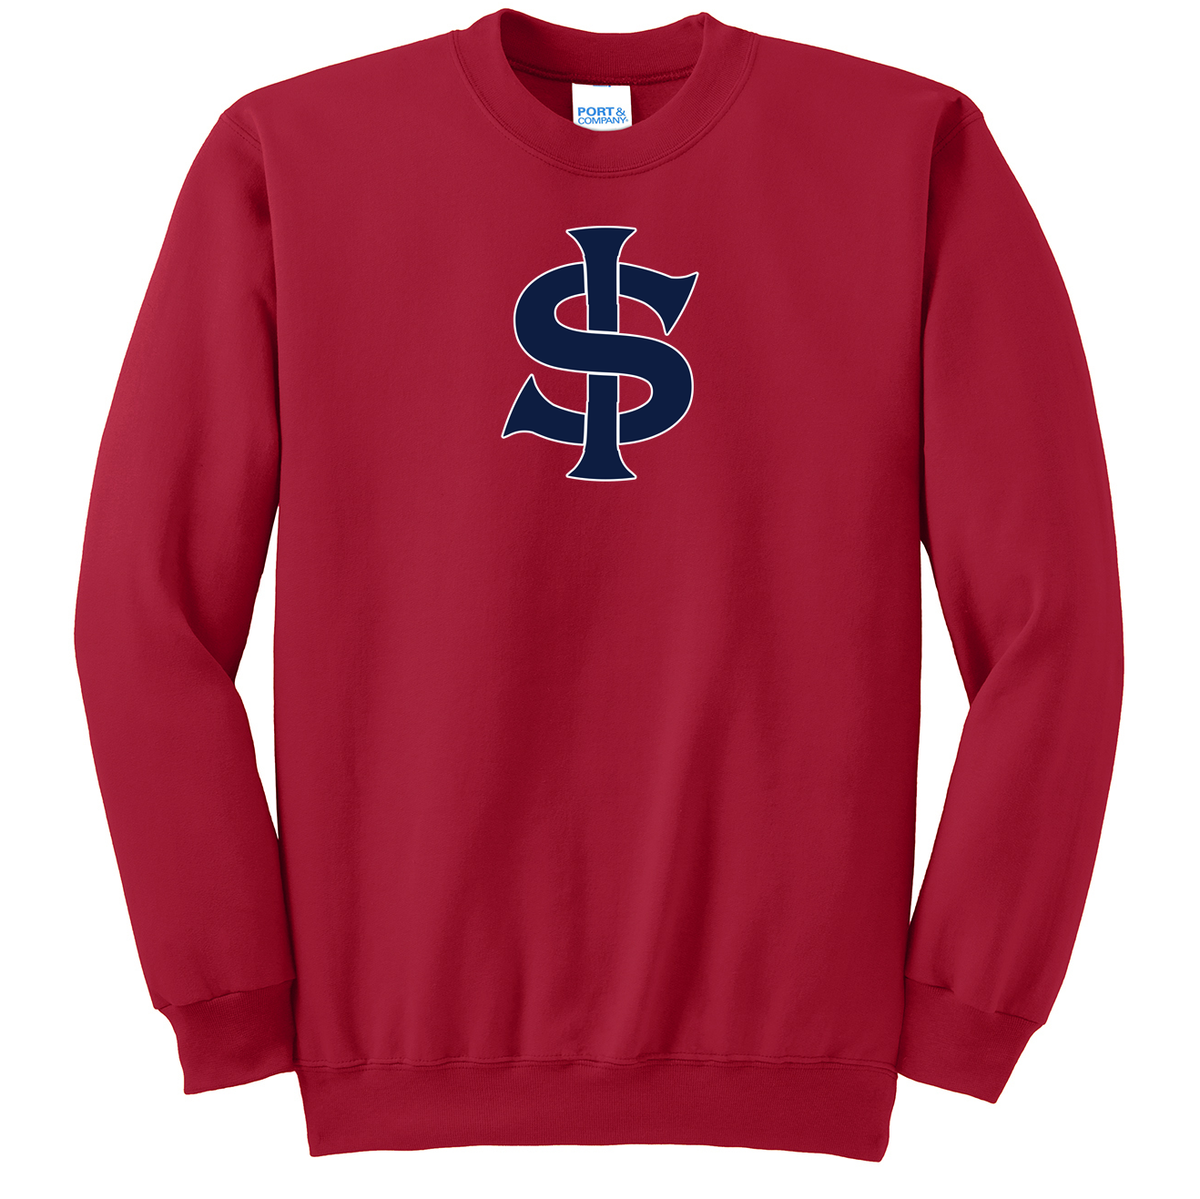 Iowa Sandlot Baseball Crew Neck Sweater